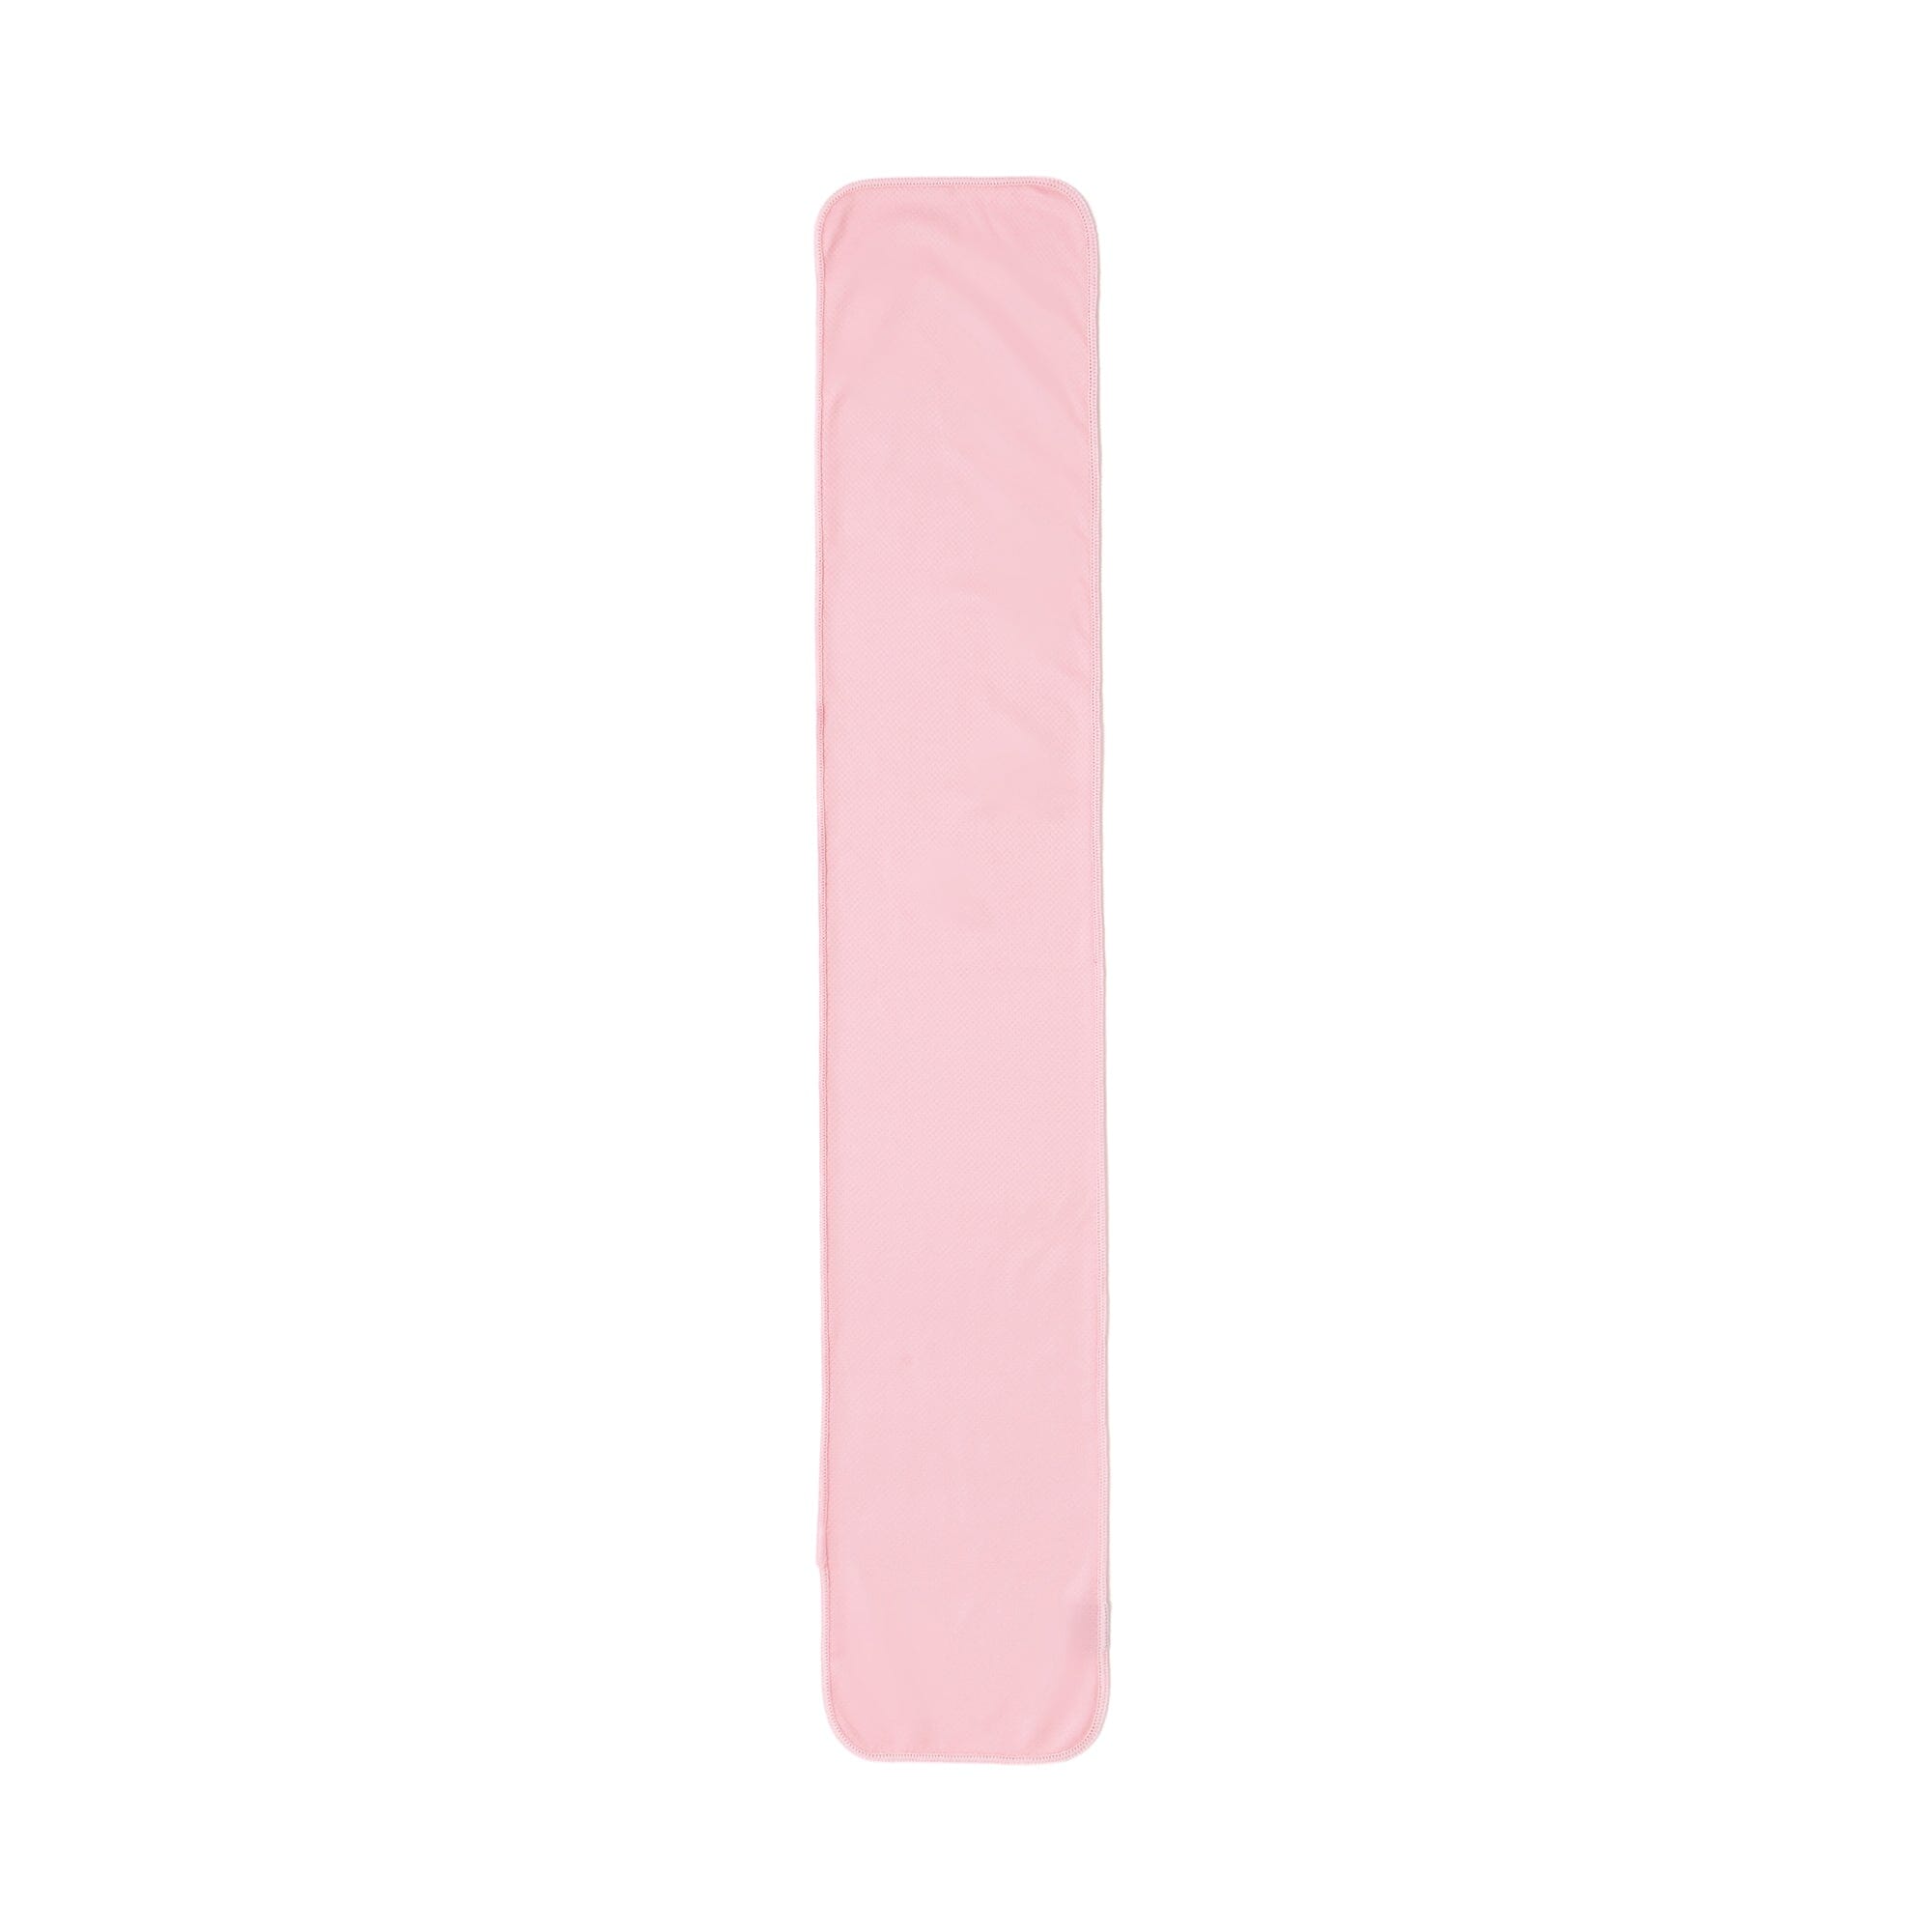 UV COOL 防紫外線涼爽毛巾 小號 粉紅色